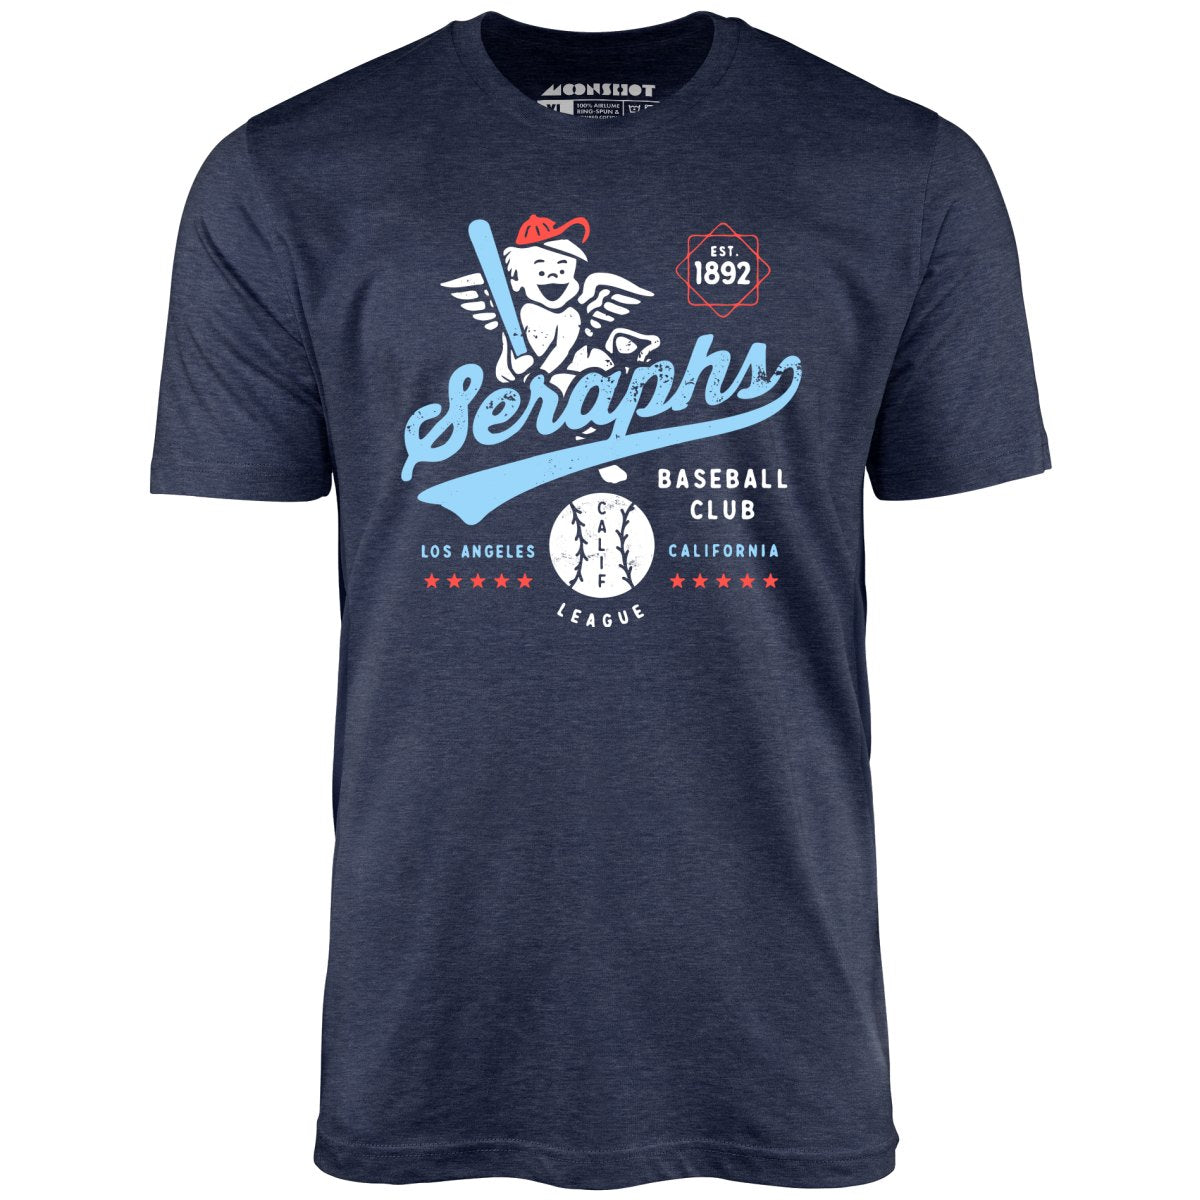 Los Angeles Seraphs - California - Vintage Defunct Baseball Teams - Unisex T-Shirt